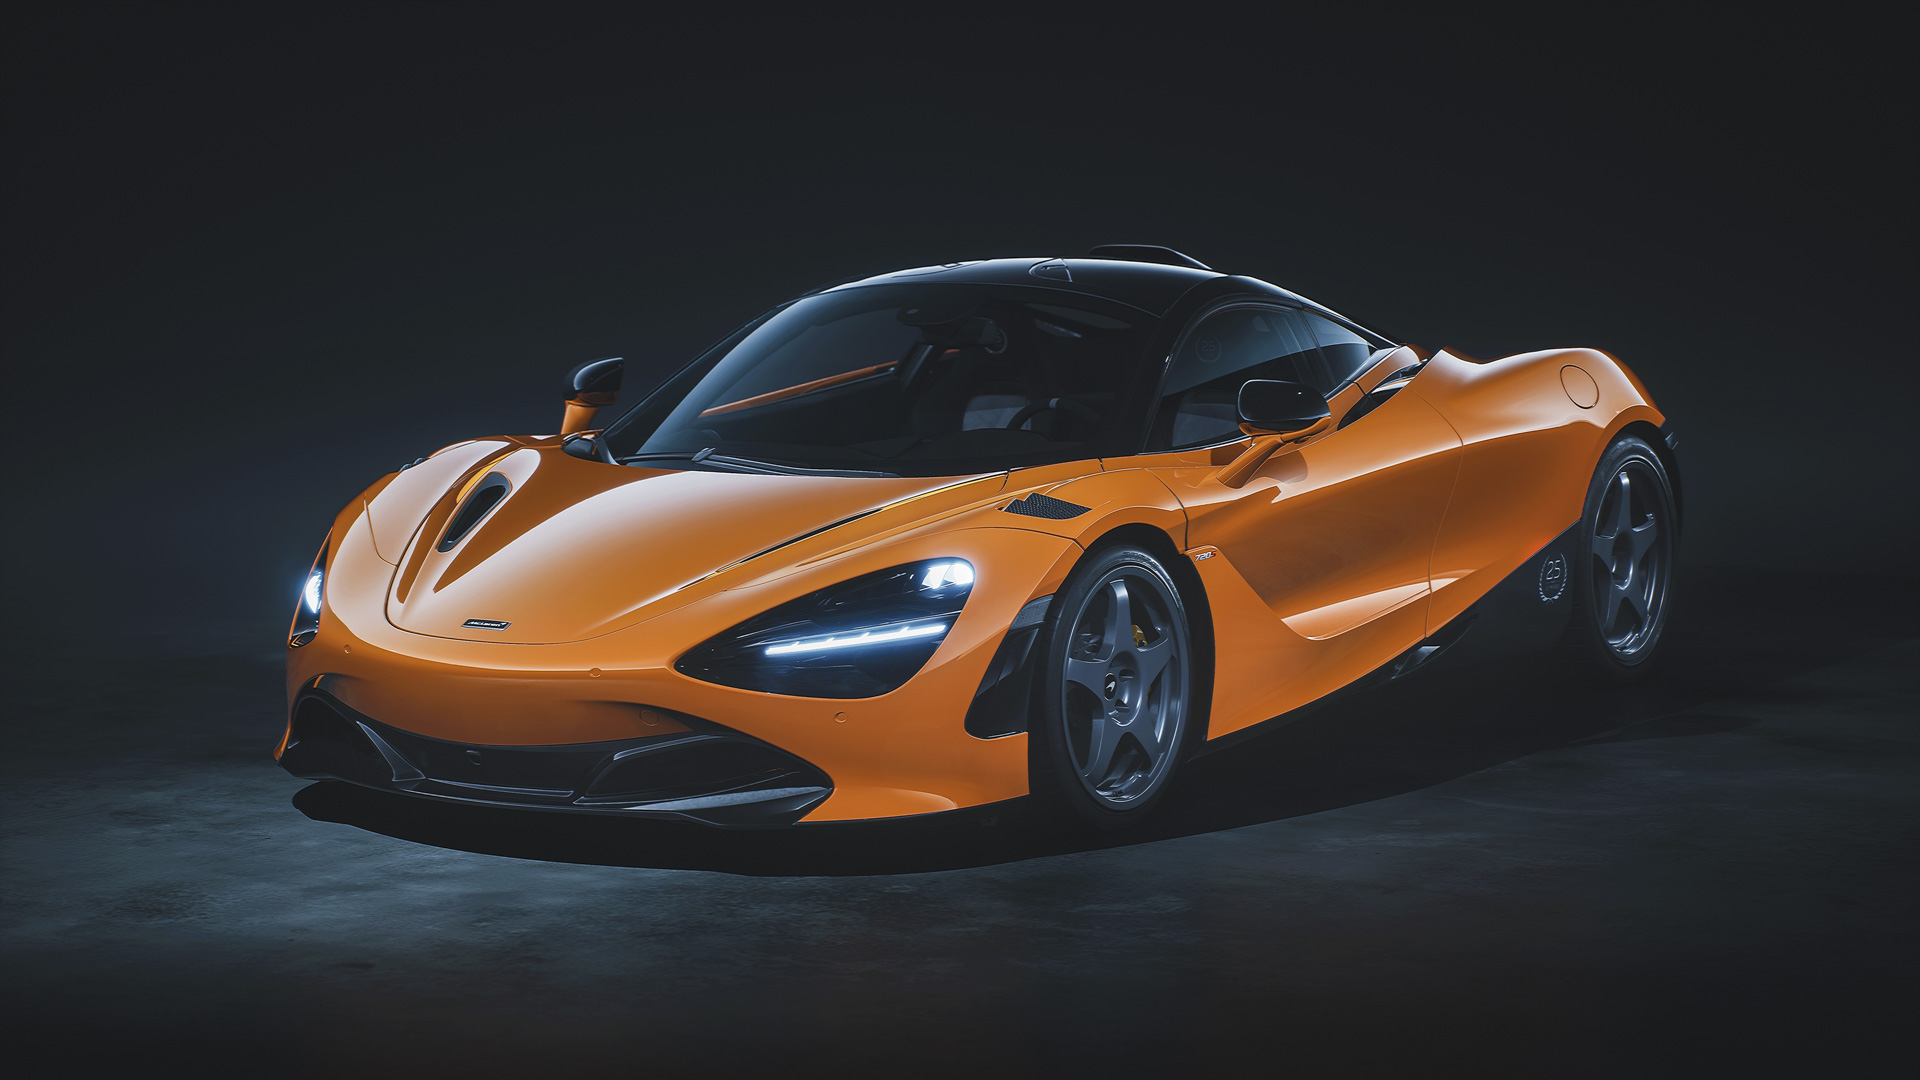 McLaren 720S is officially dead - Autoblog